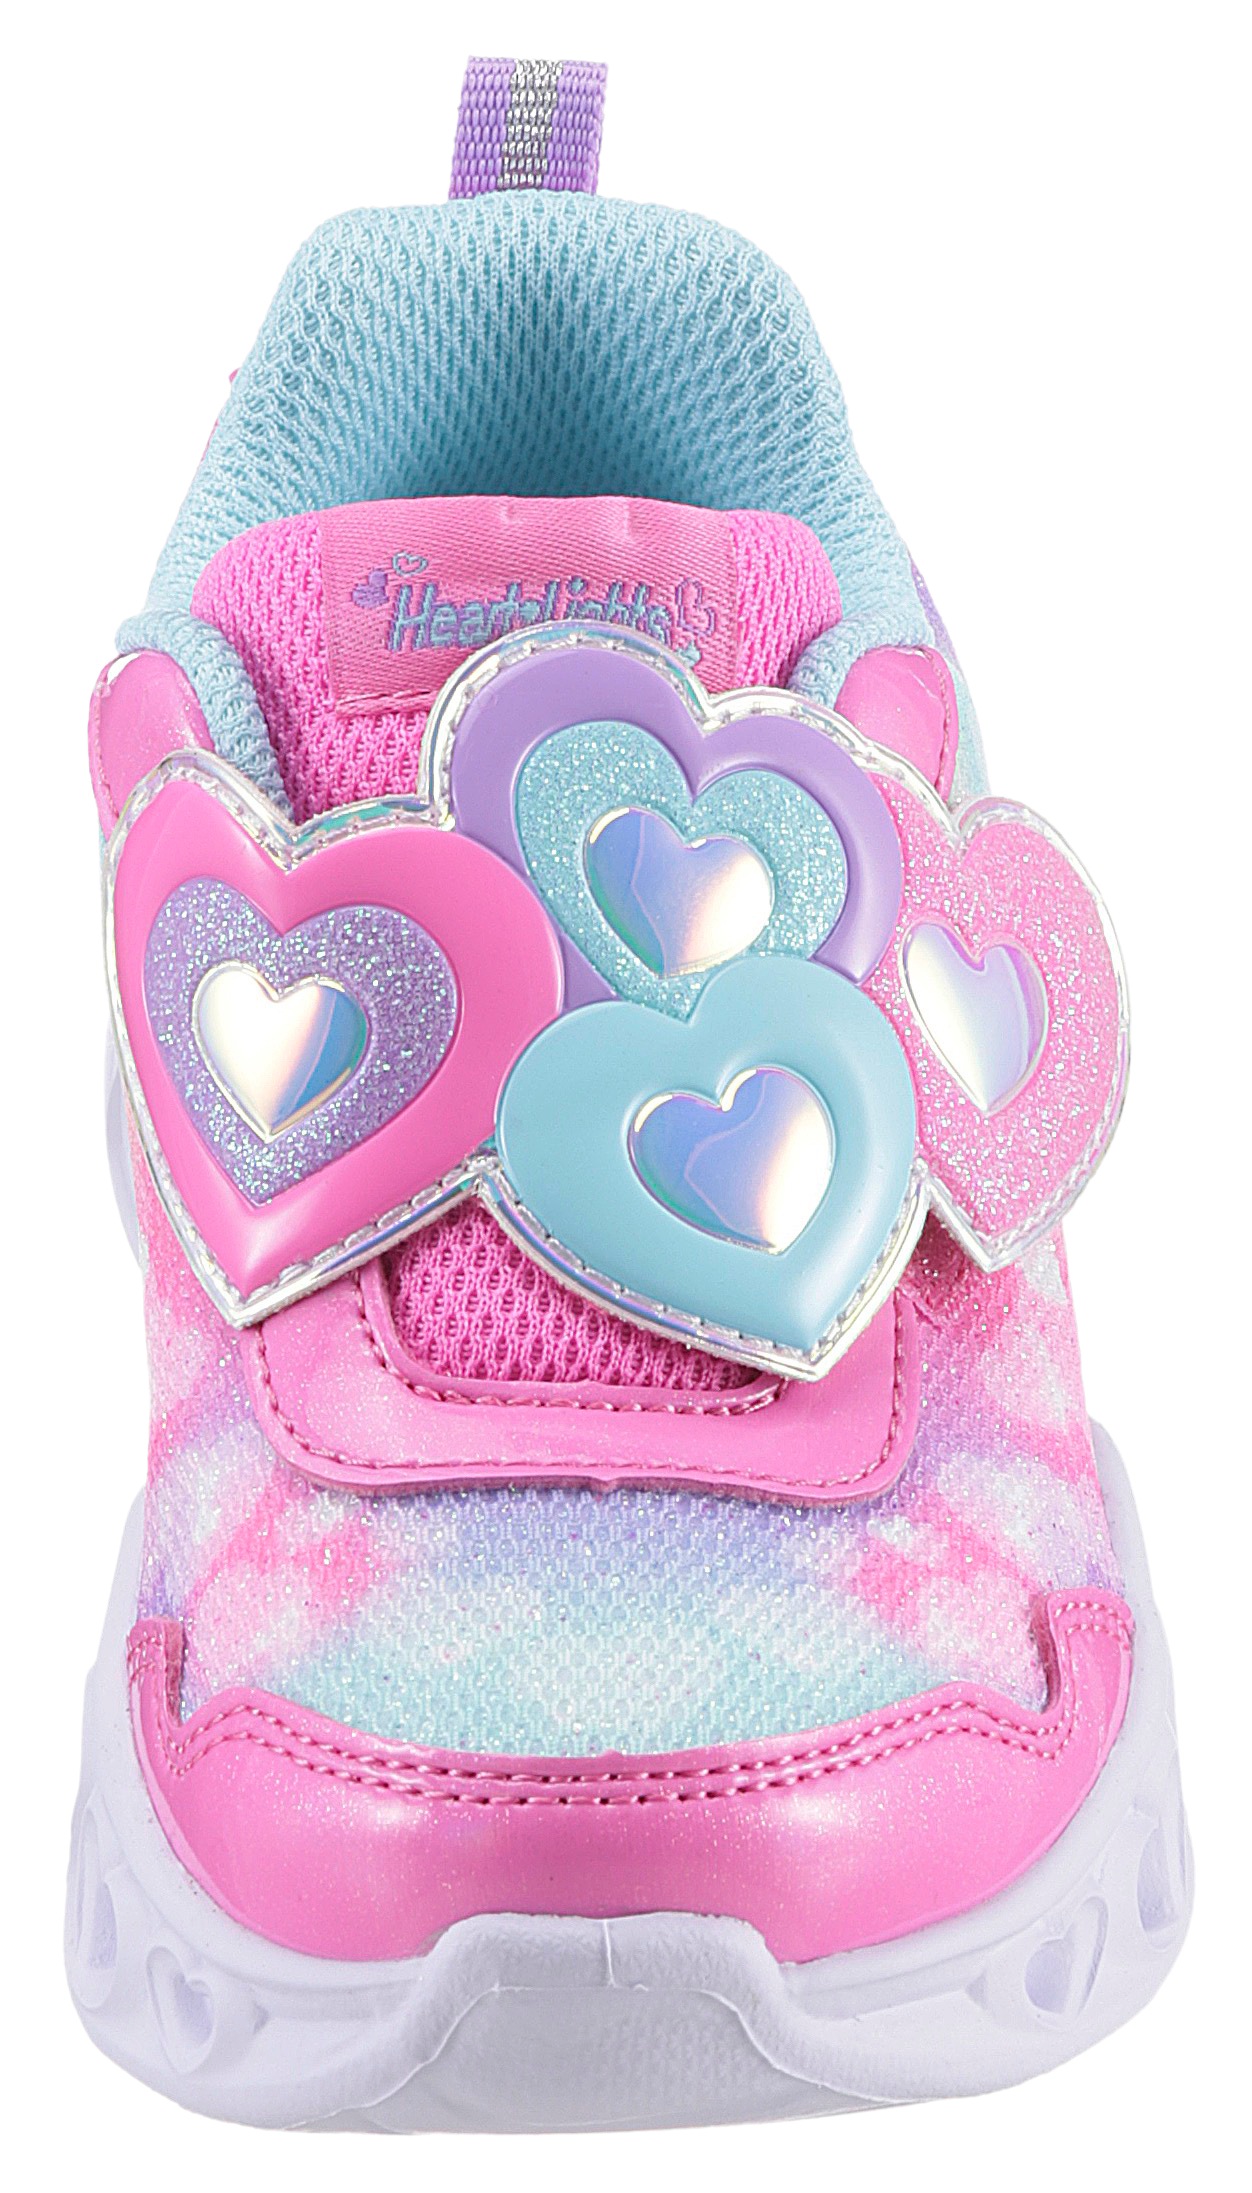 Skechers Kids Lauflernschuh »Blinkschuh HEART LIGHTS - LOVIN REFLECTION«, Sneaker, Klettschuh, Blinkschuh mit hübscher Herz-Applikation